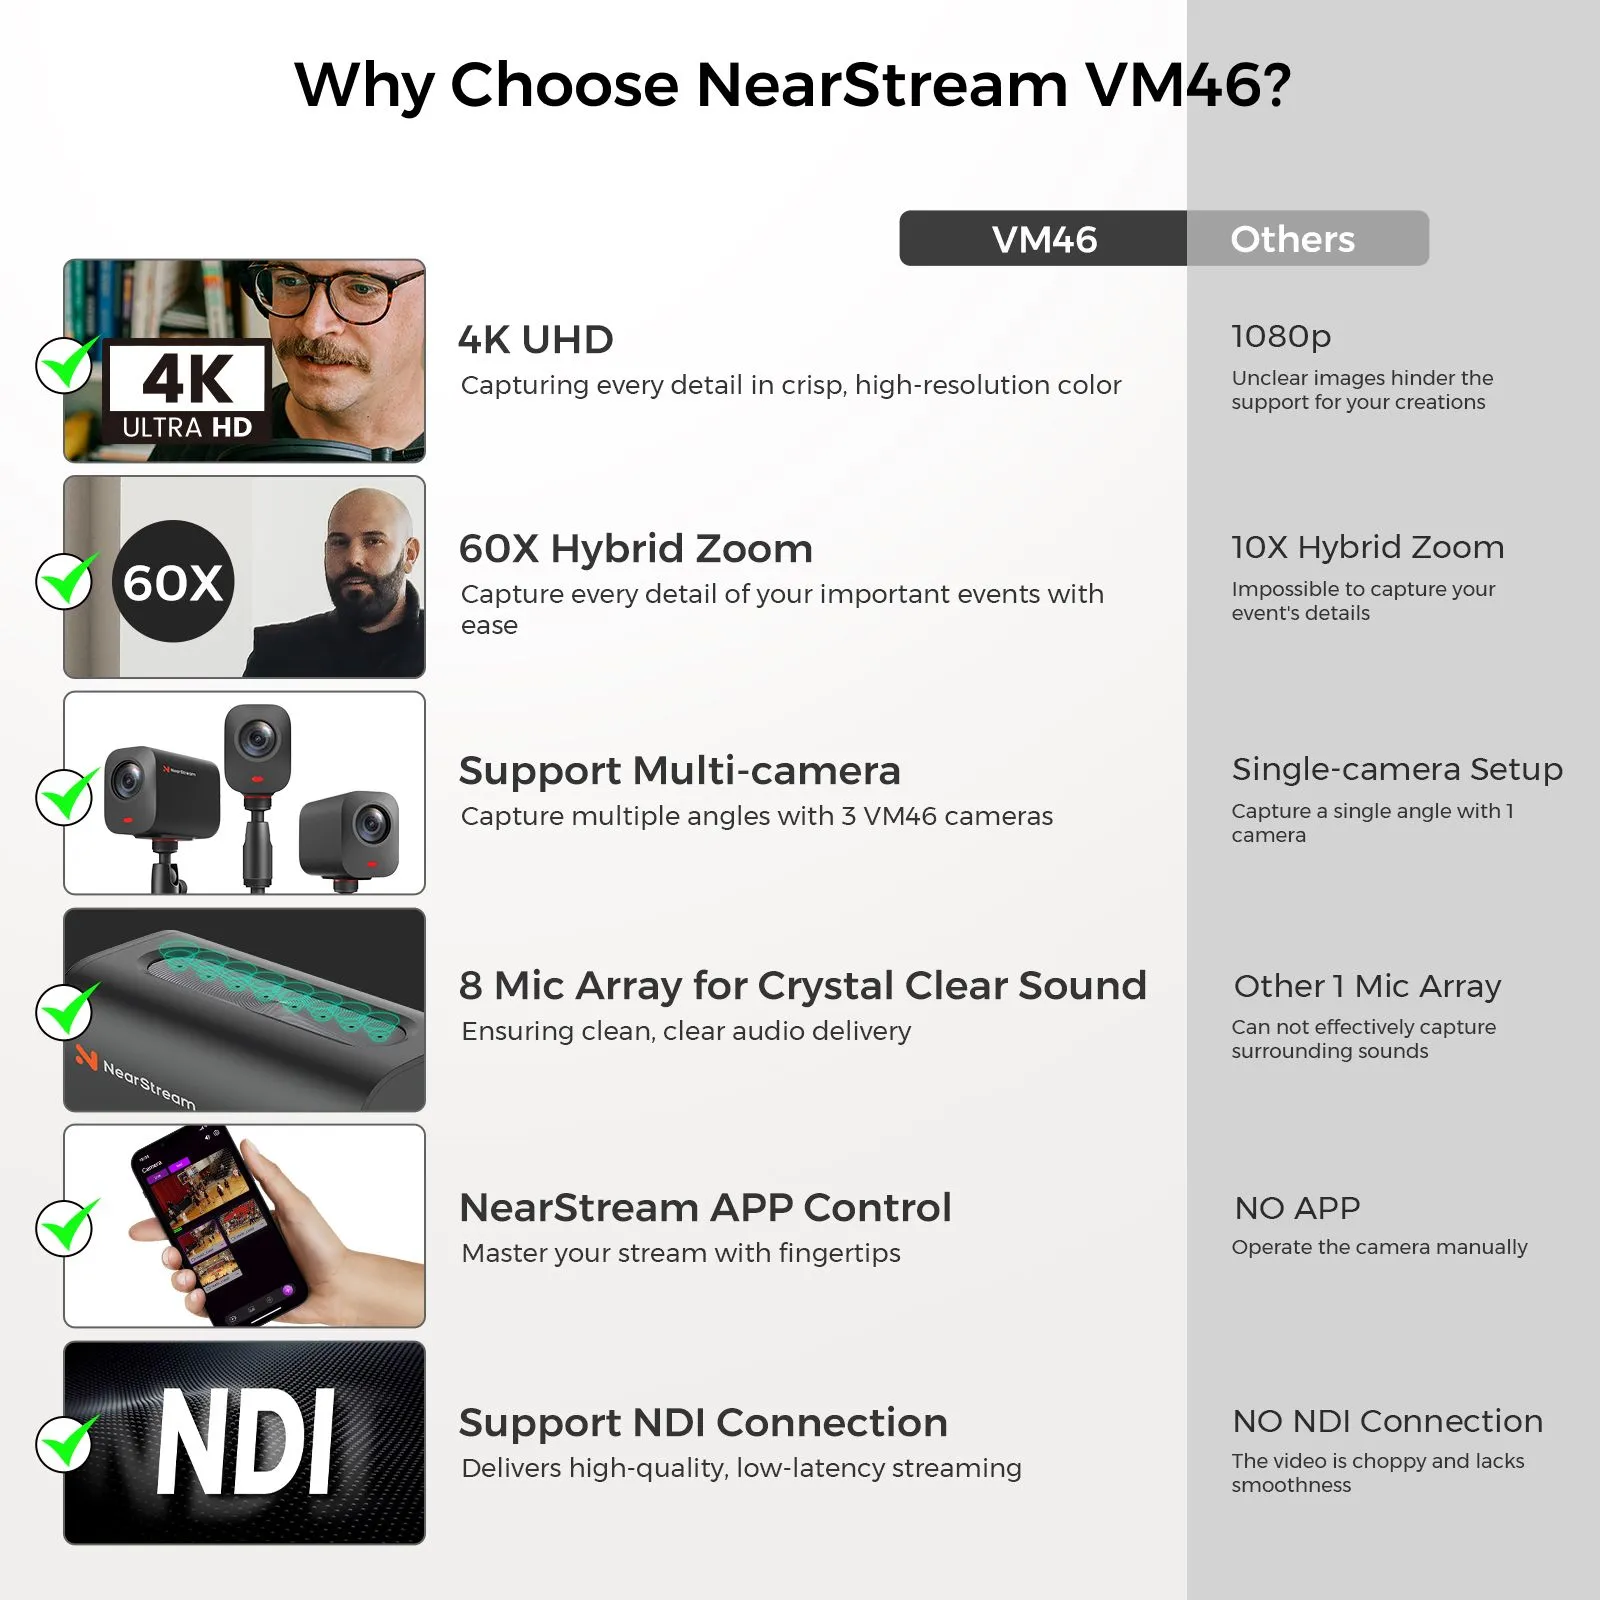 The reasons to choose NearStream VM46